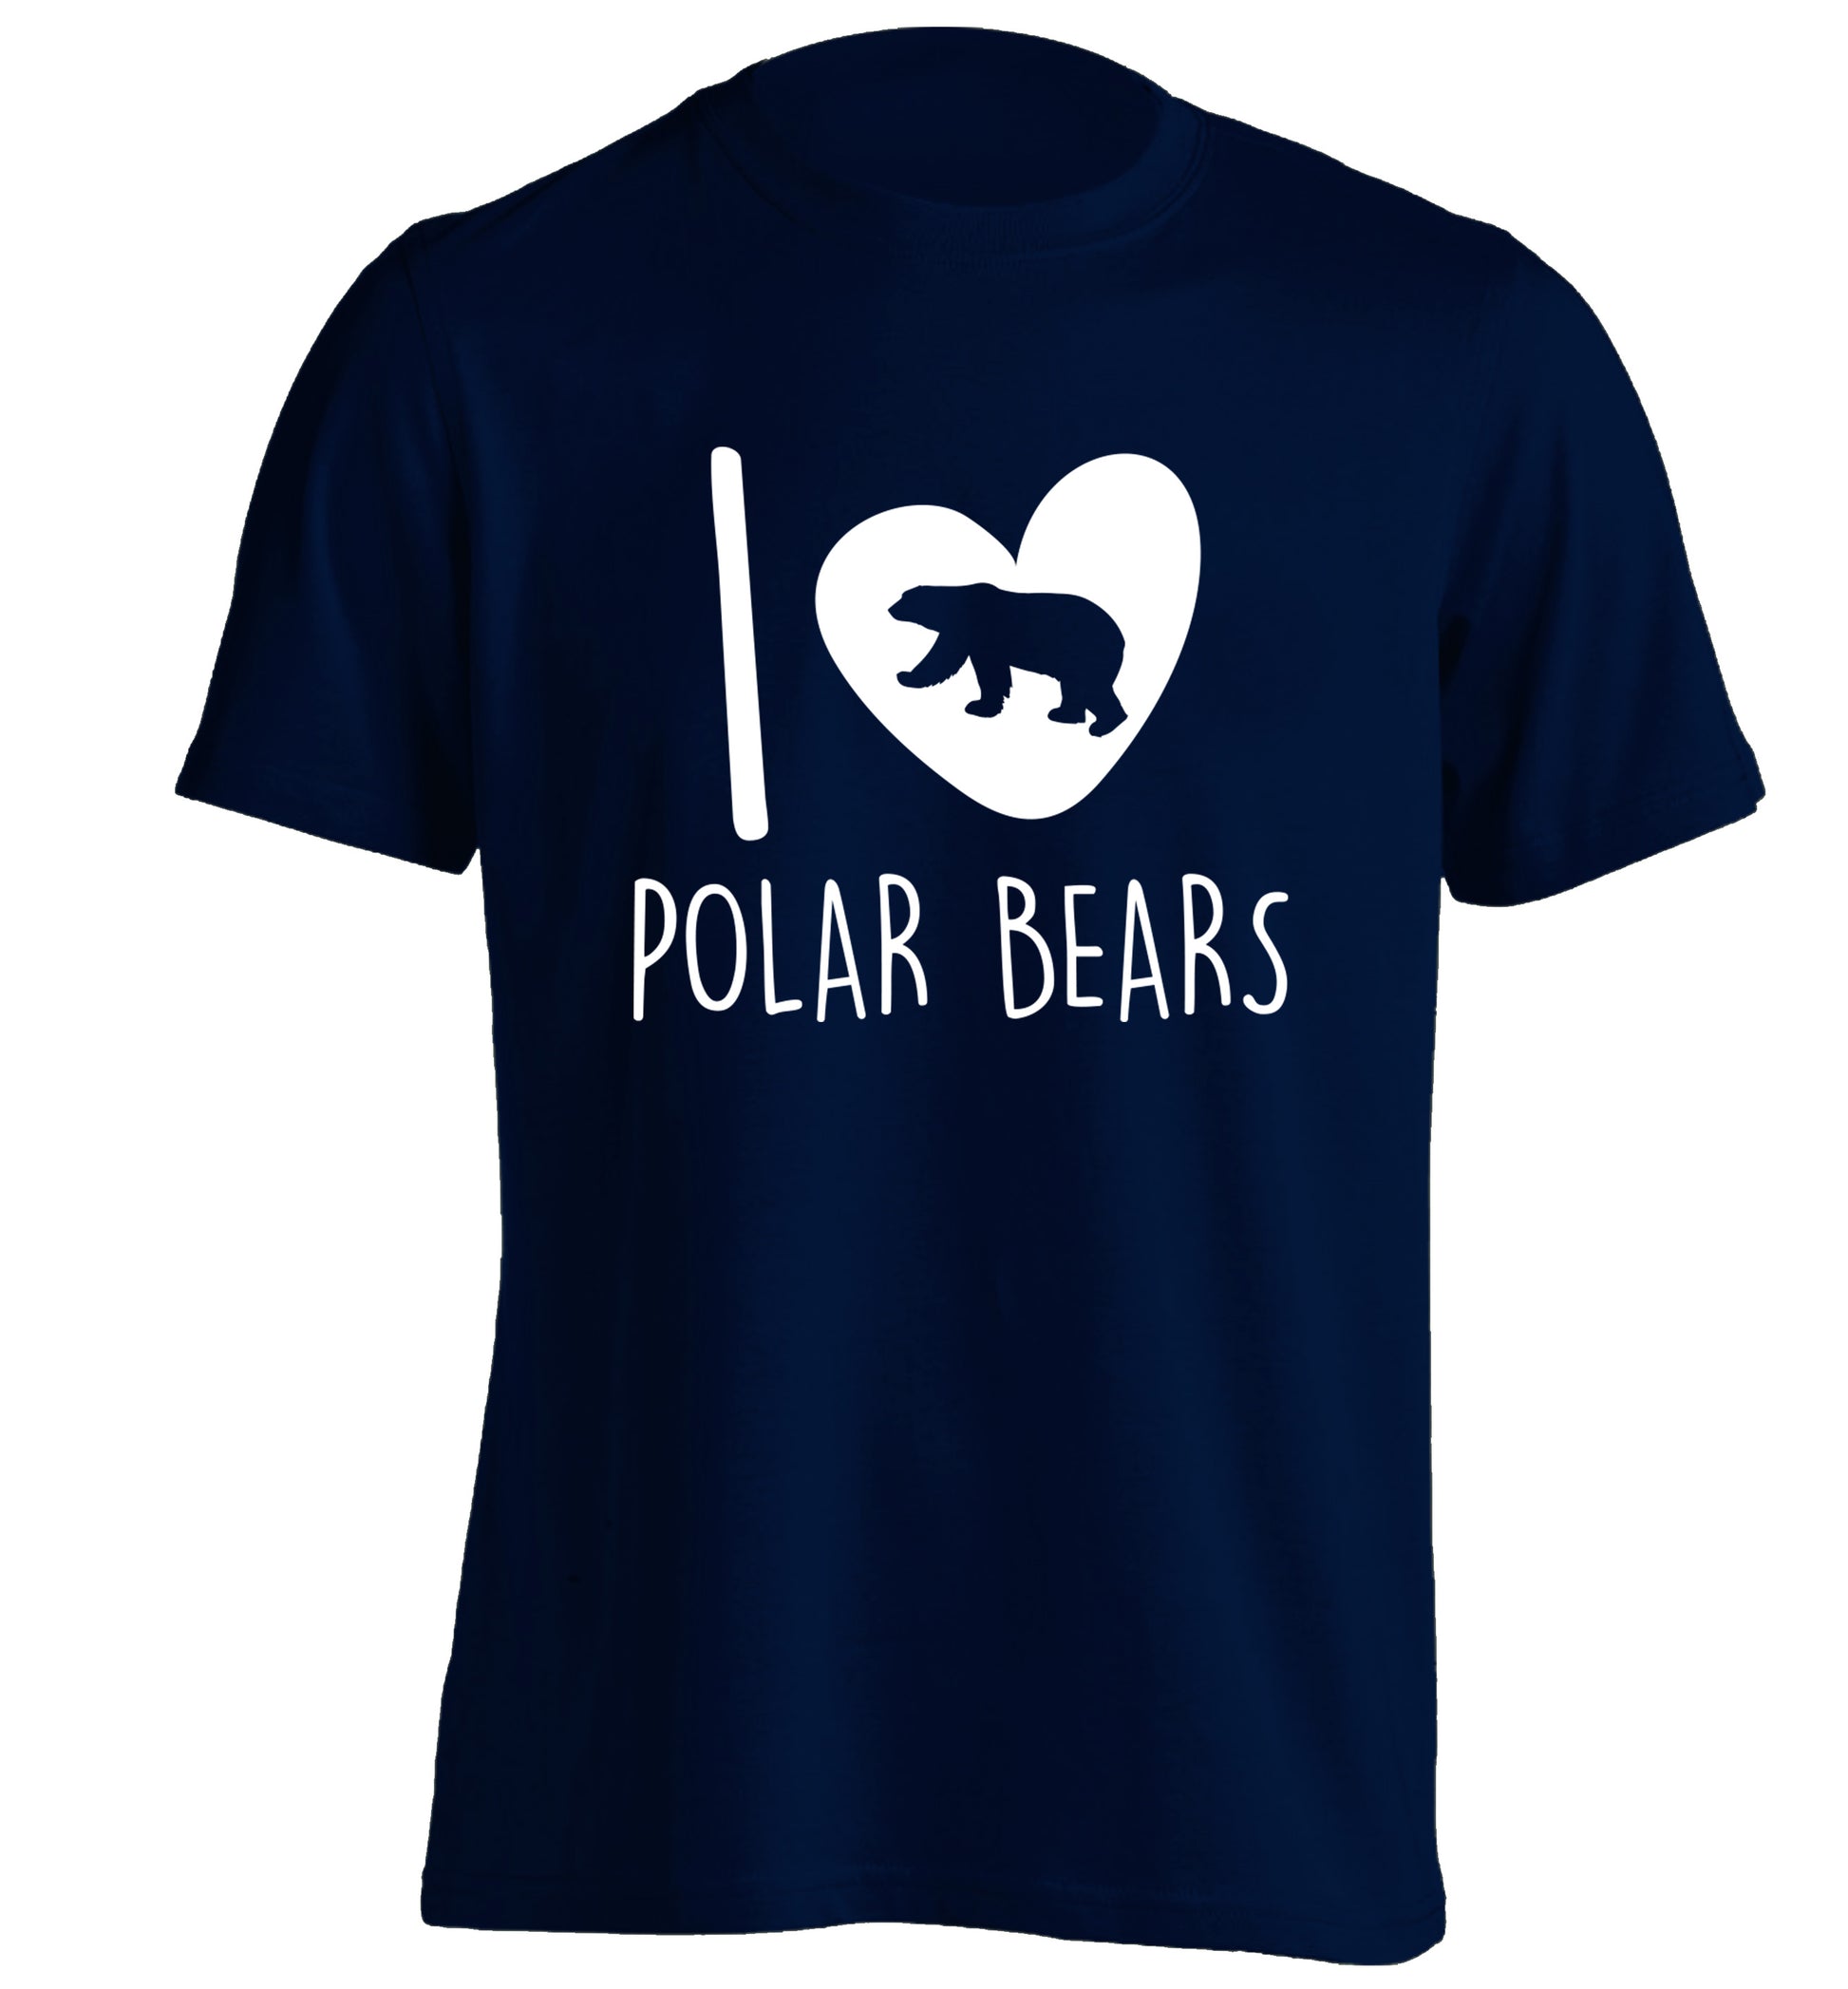 I Love Polar Bears adults unisex navy Tshirt 2XL